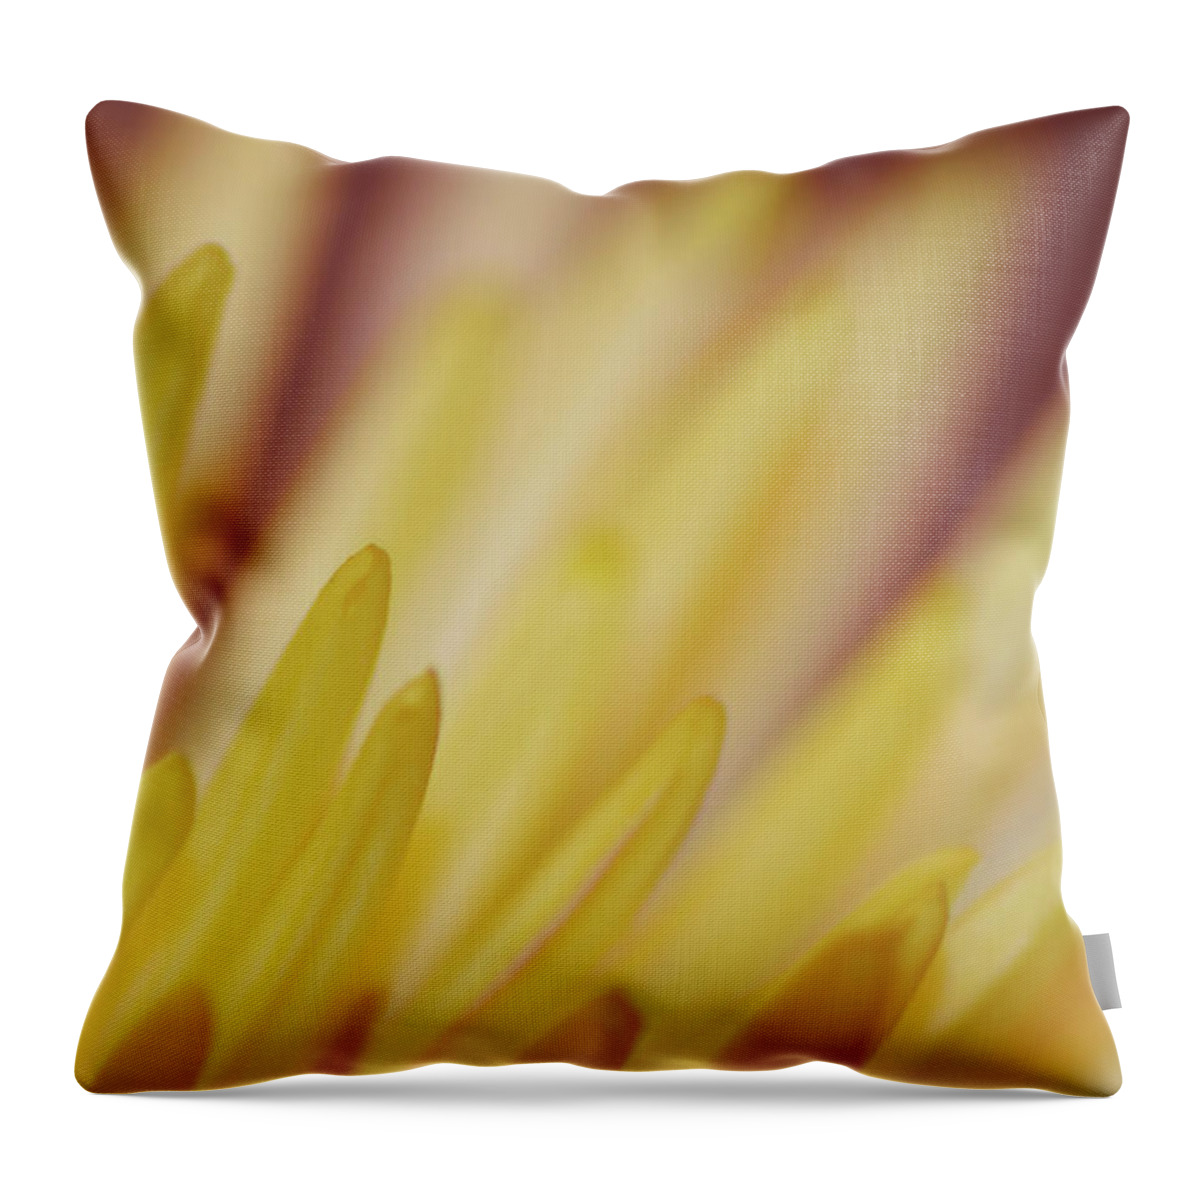 Photograph Throw Pillow featuring the photograph Yellow Mum Petals #3 by Larah McElroy